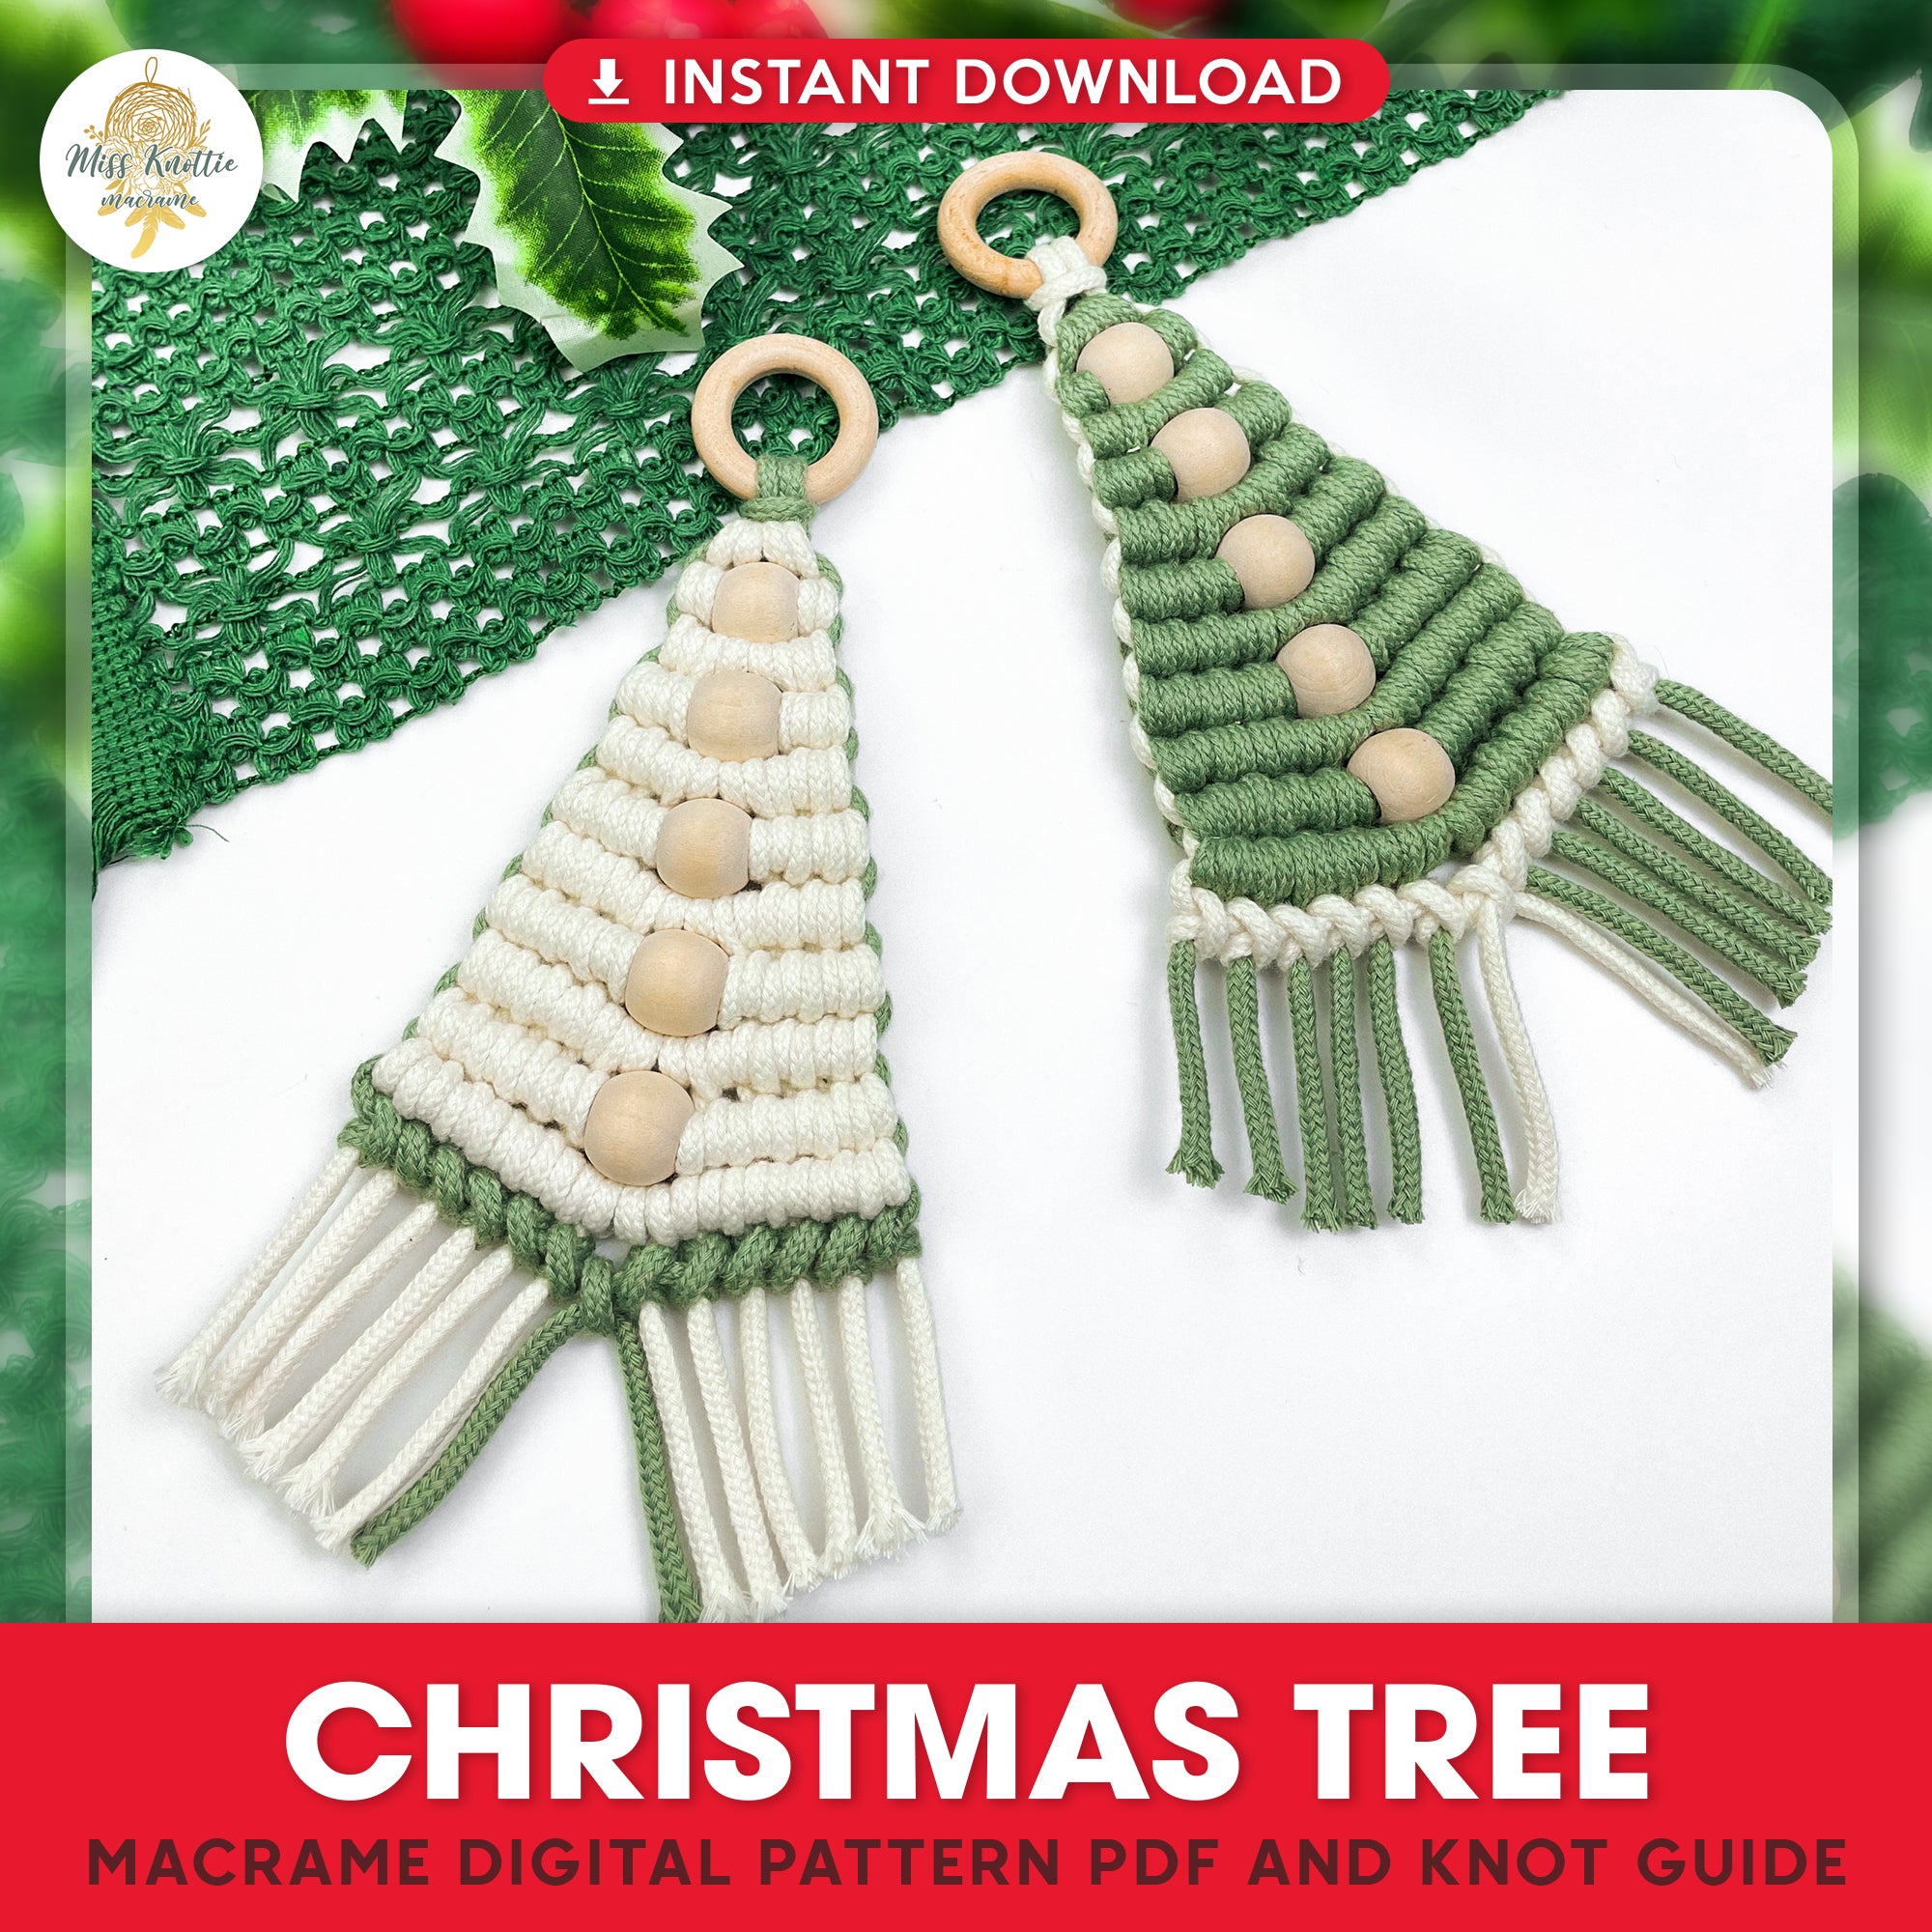 Macrame Christmas Tree - Digital PDF and Knot Guide